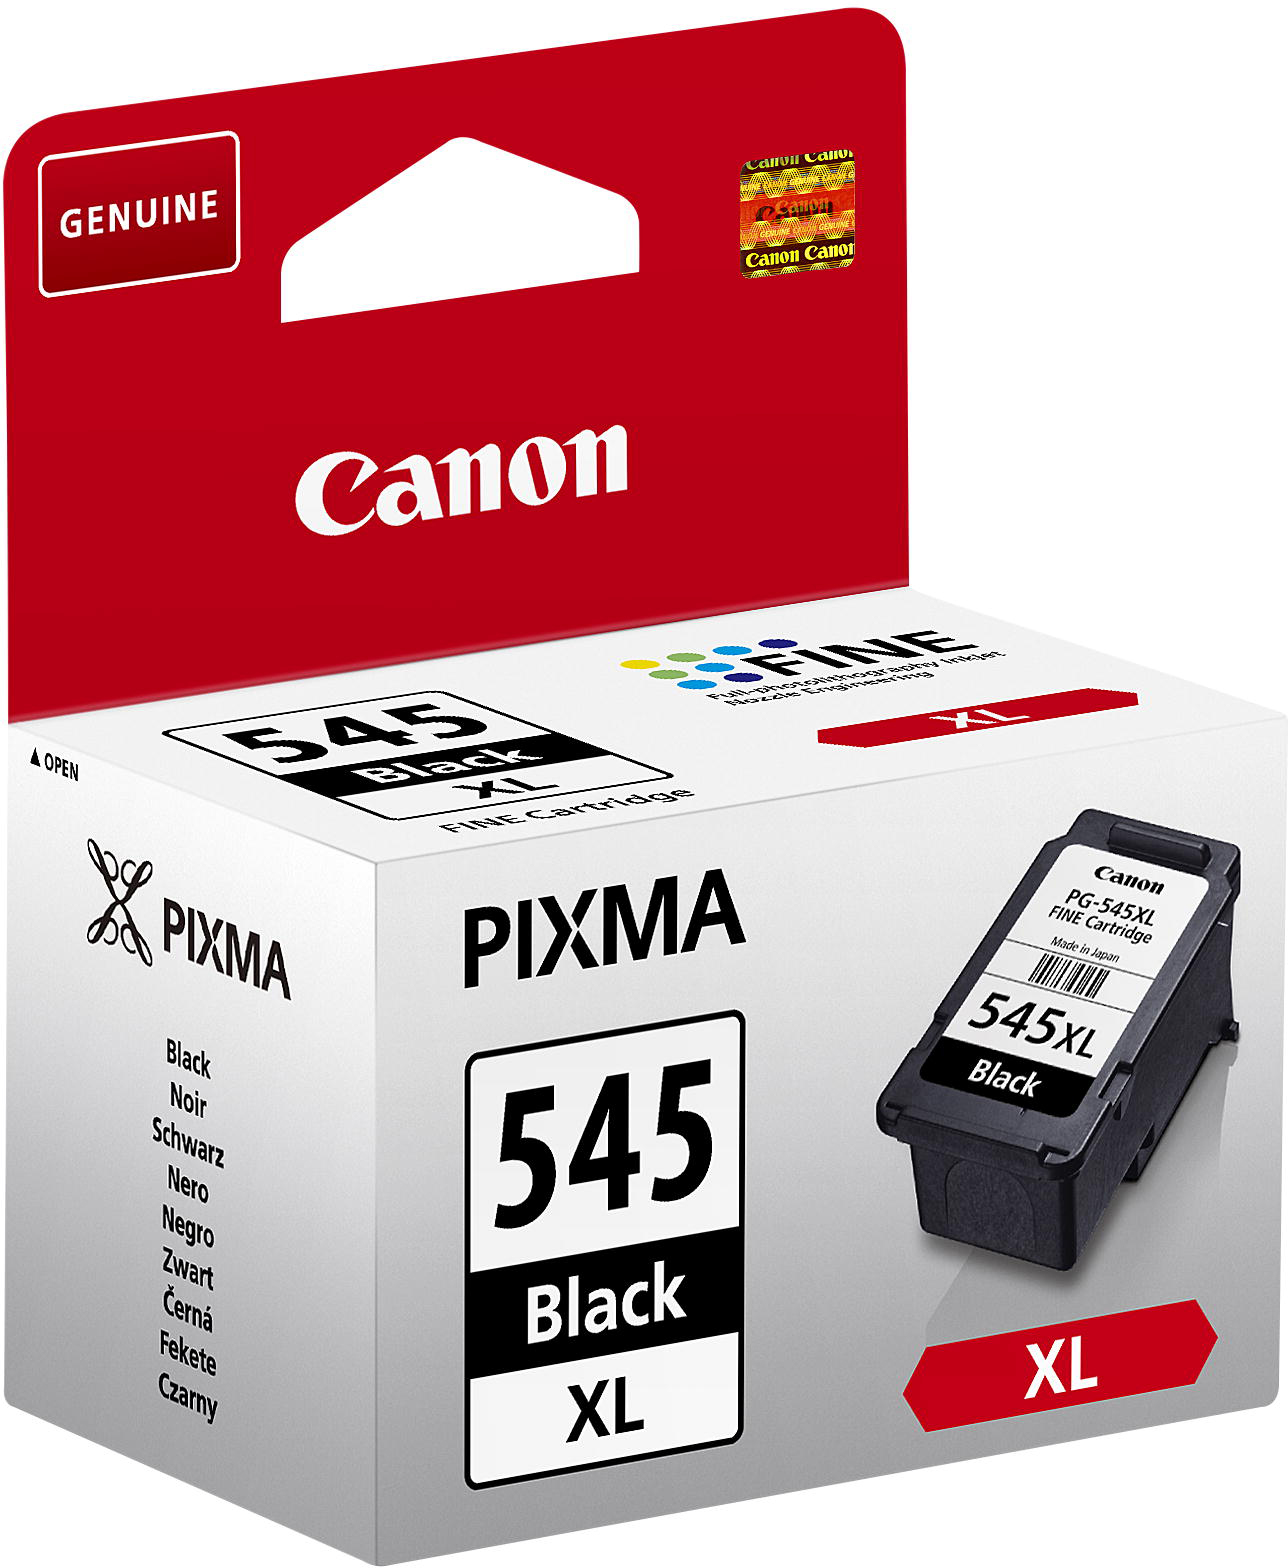 BB Reman Canon 8286B001 (PG-545XL) Black Cart 8286B001 - rem01